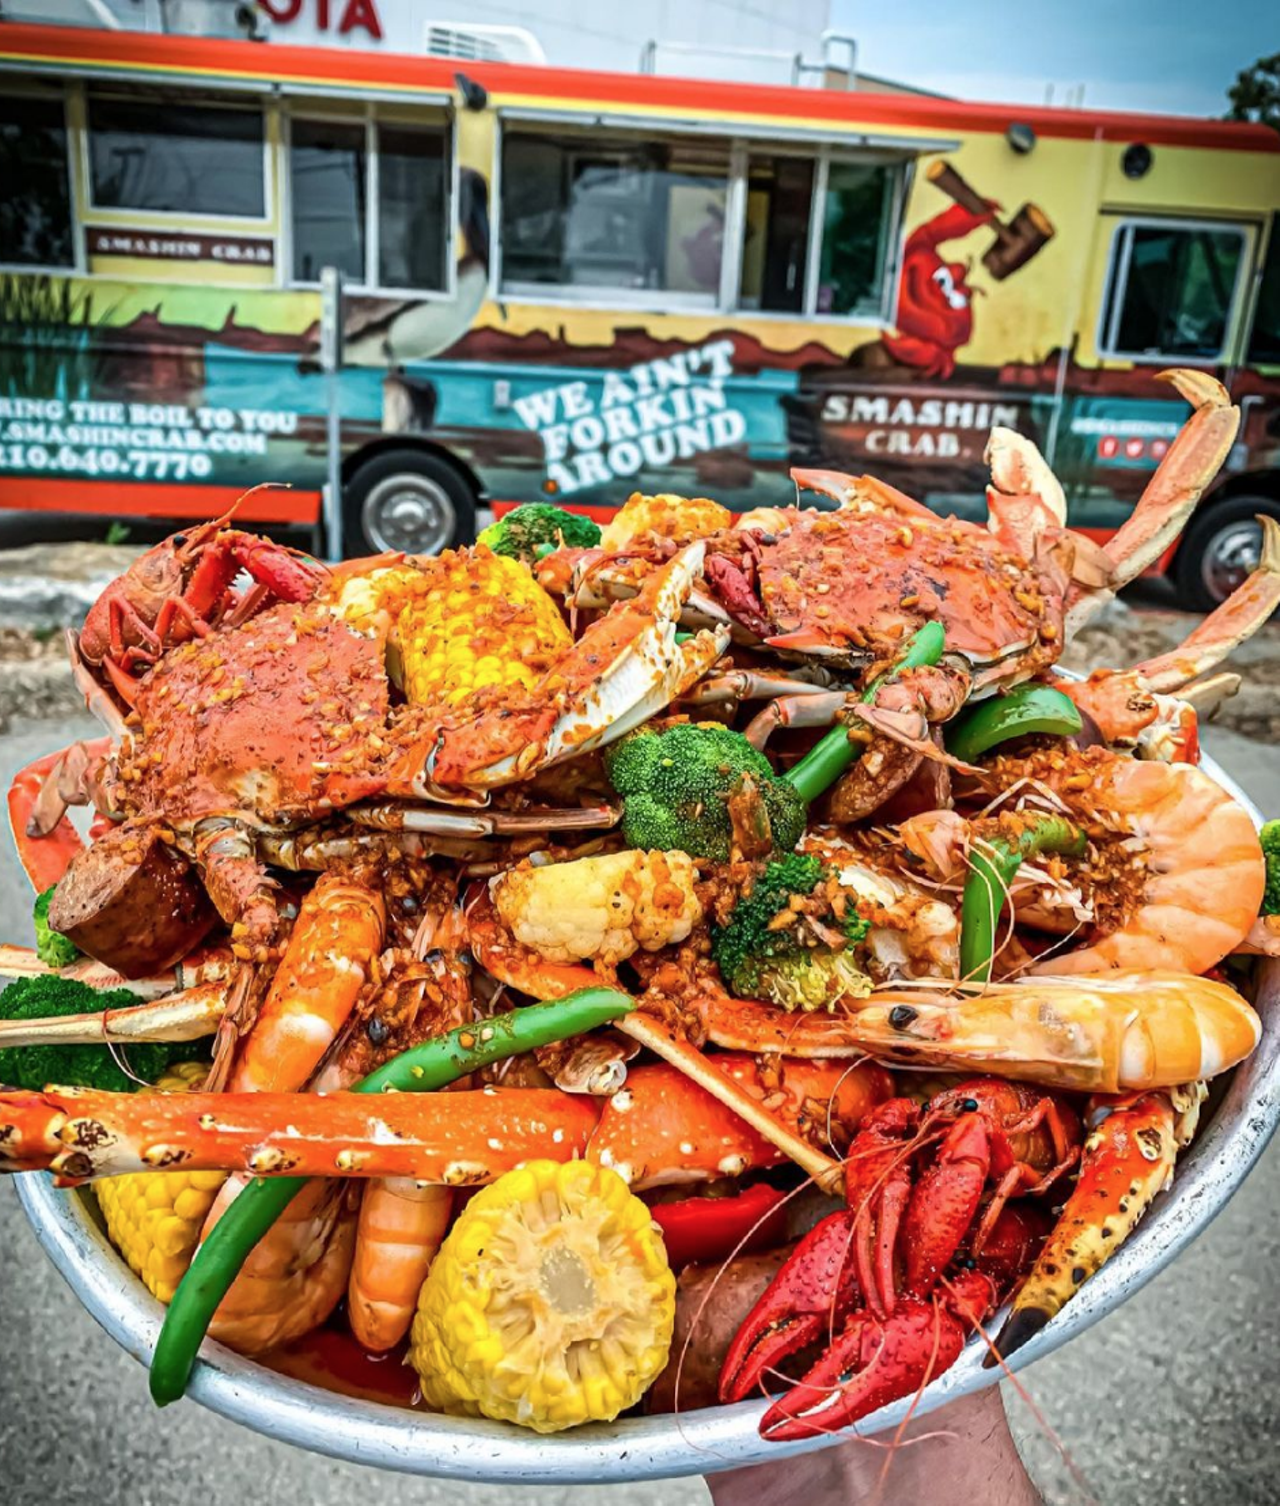 Best Crawfish
Smashin Crab, Multiple locations, smashincrab.com
Photo via Instagram / eldereats